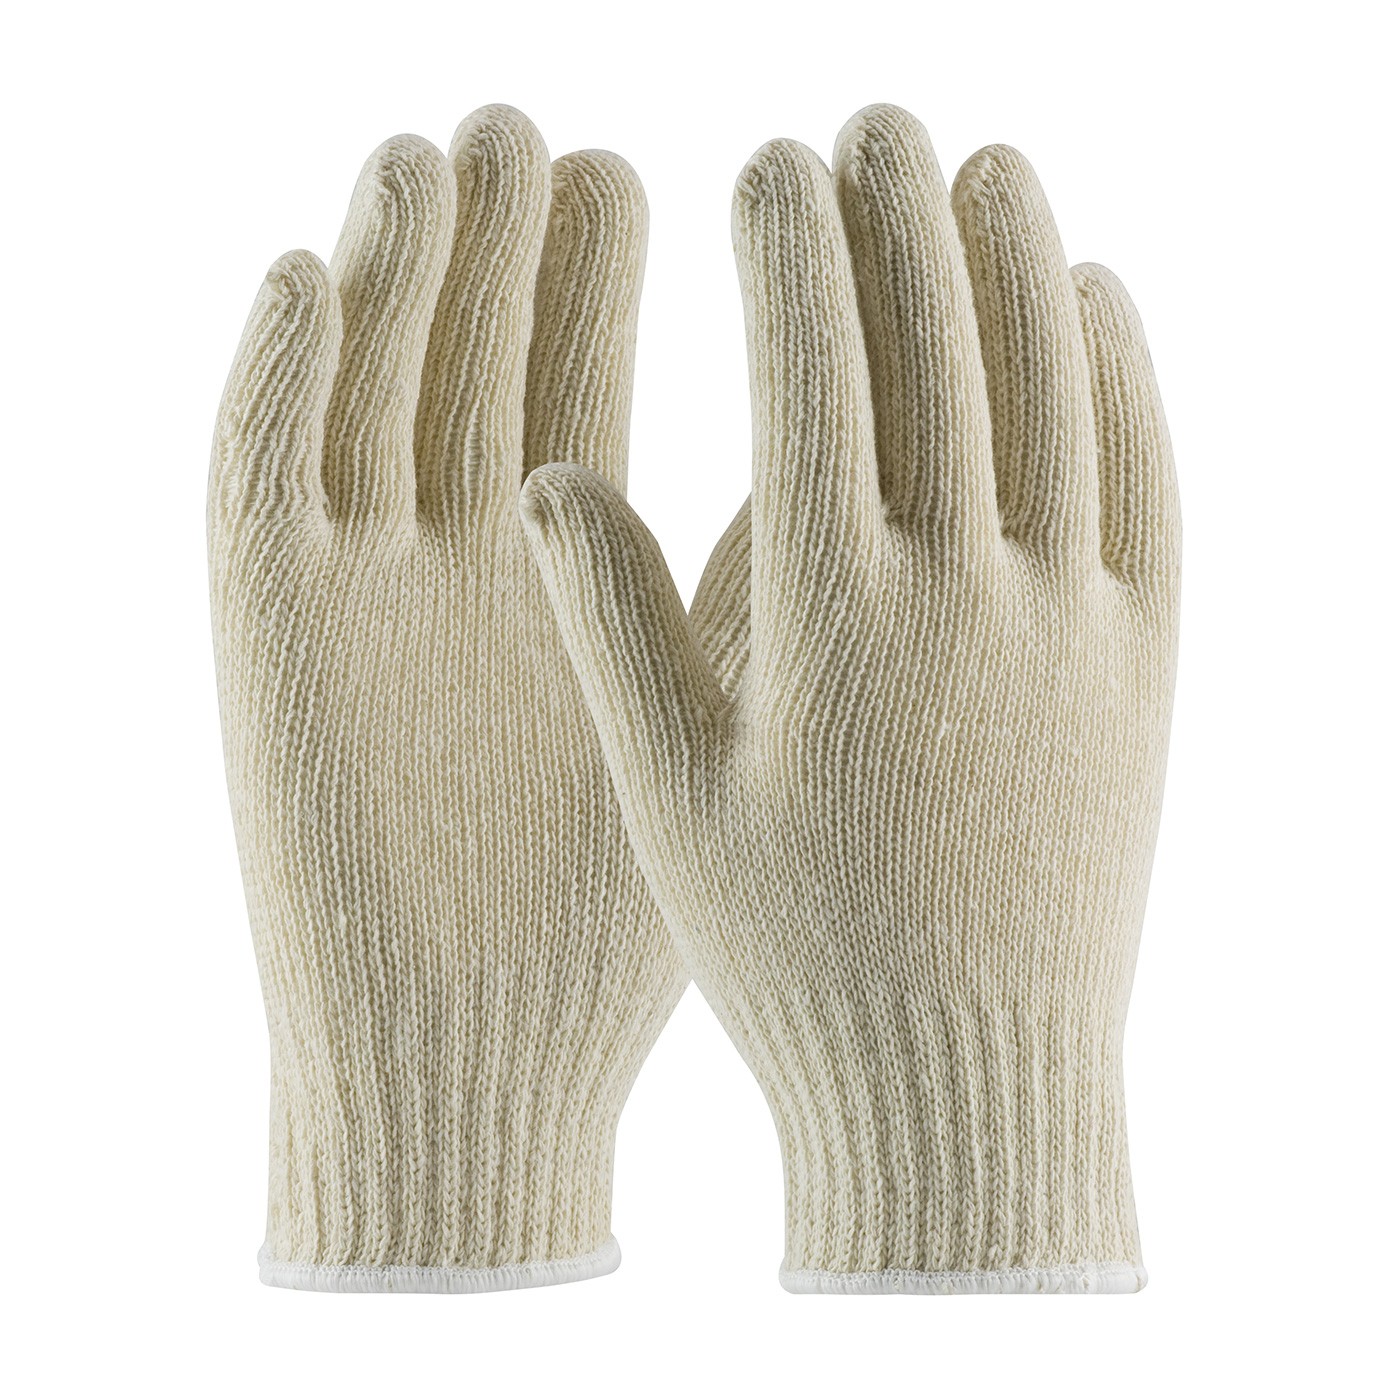 PIP® Premium Seamless Knit Cotton / Polyester Glove - 7 Gauge  (#K708S30)